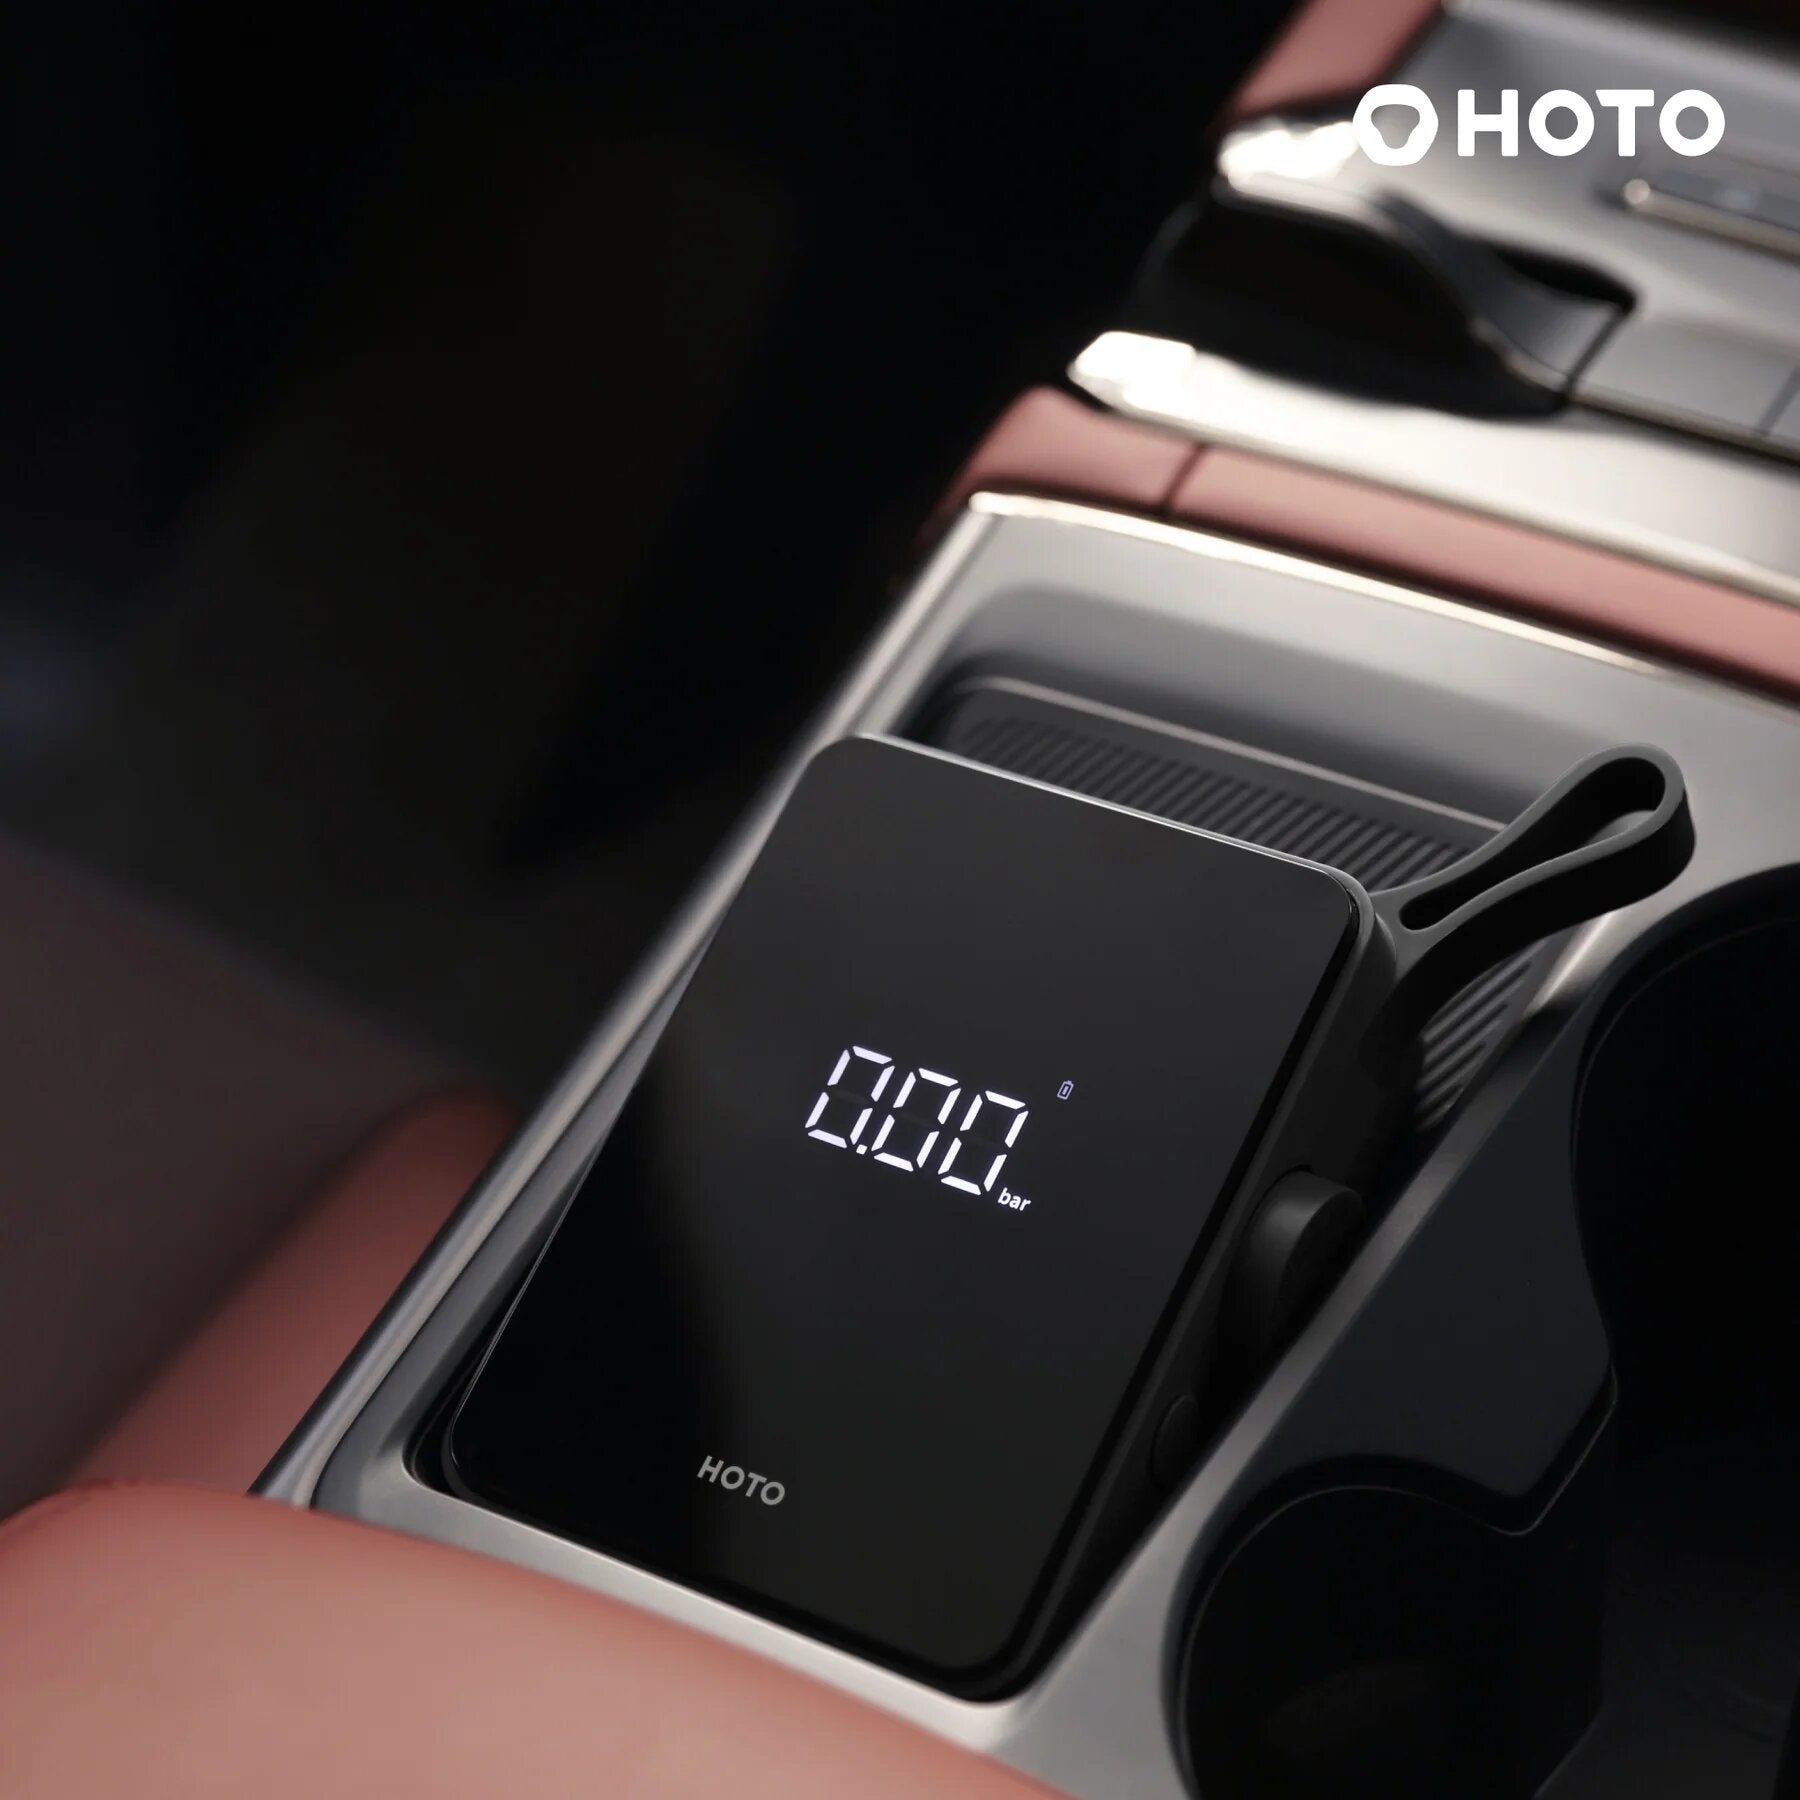 Hoto Portable Electric Tire Inflator Digital Air Compressor - Black